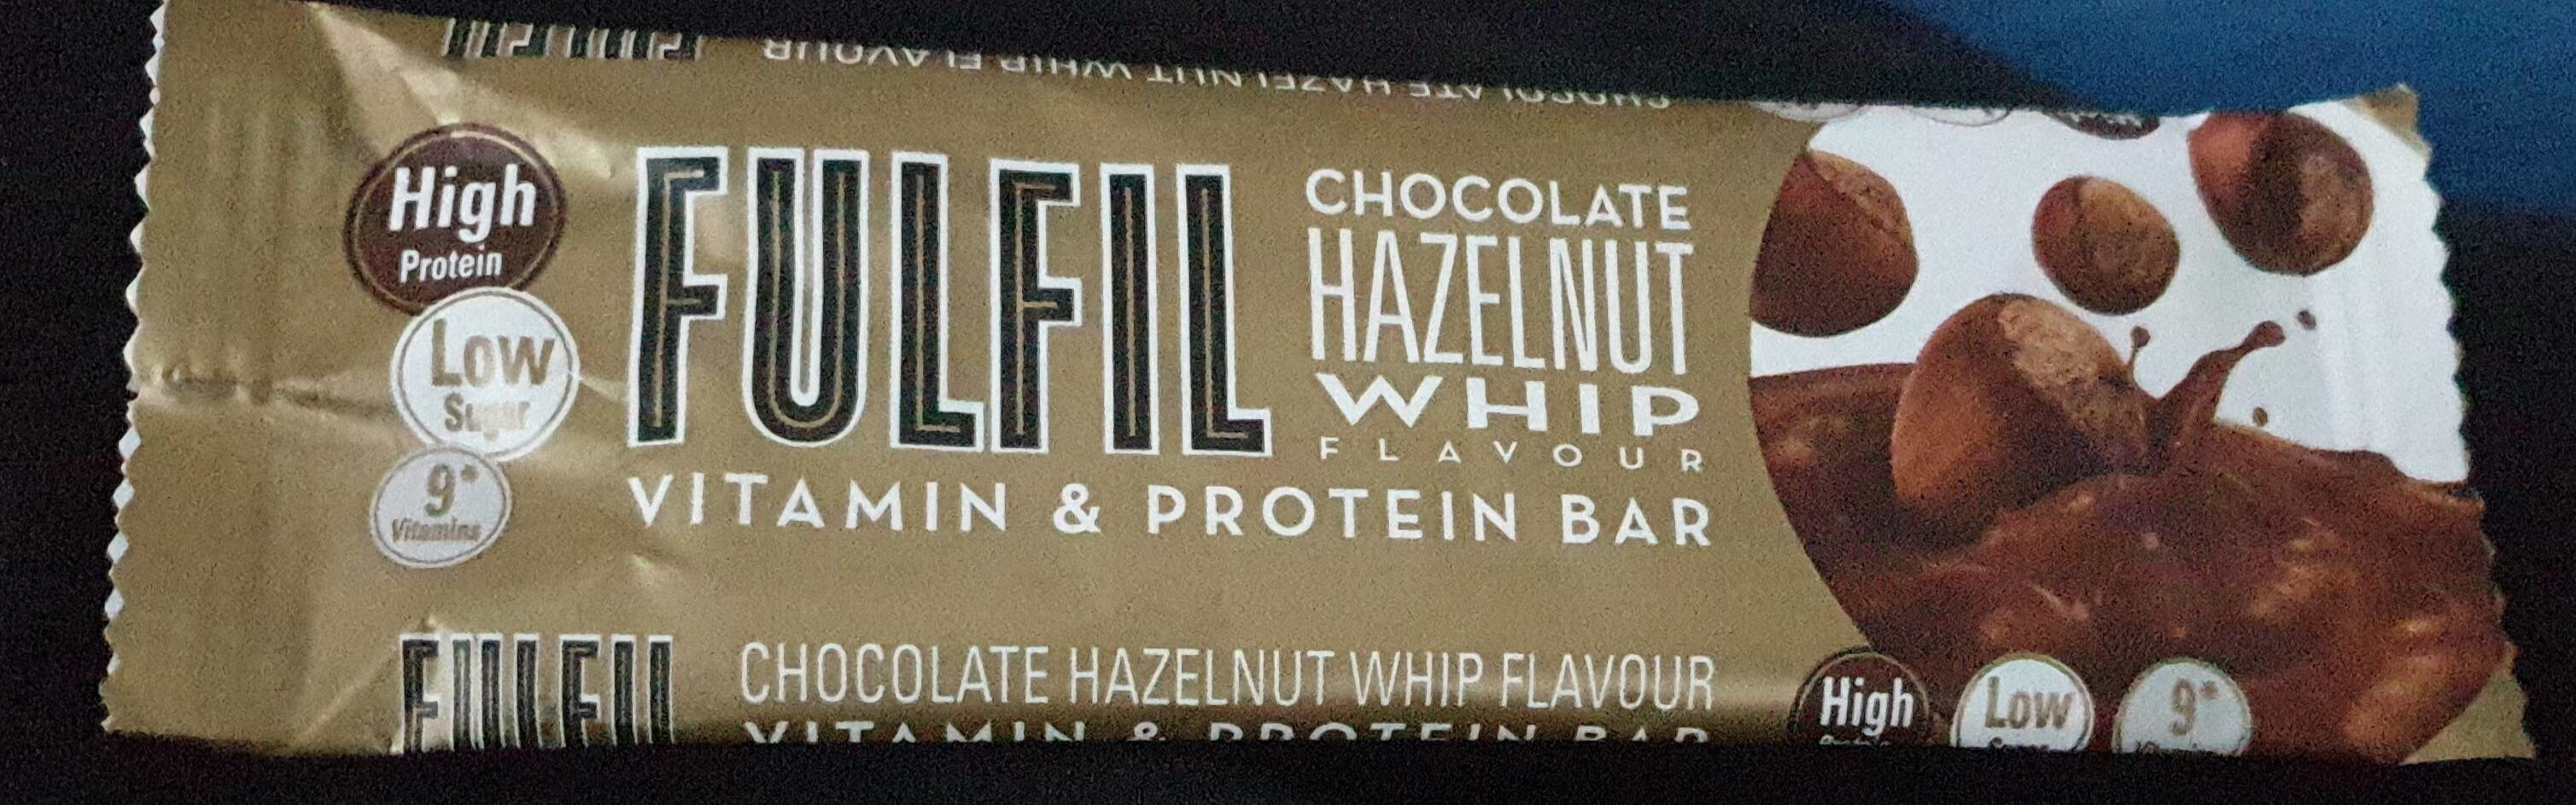 Chocolate Hazelnut Whip Flavour Vitamin Protein Bar - Product